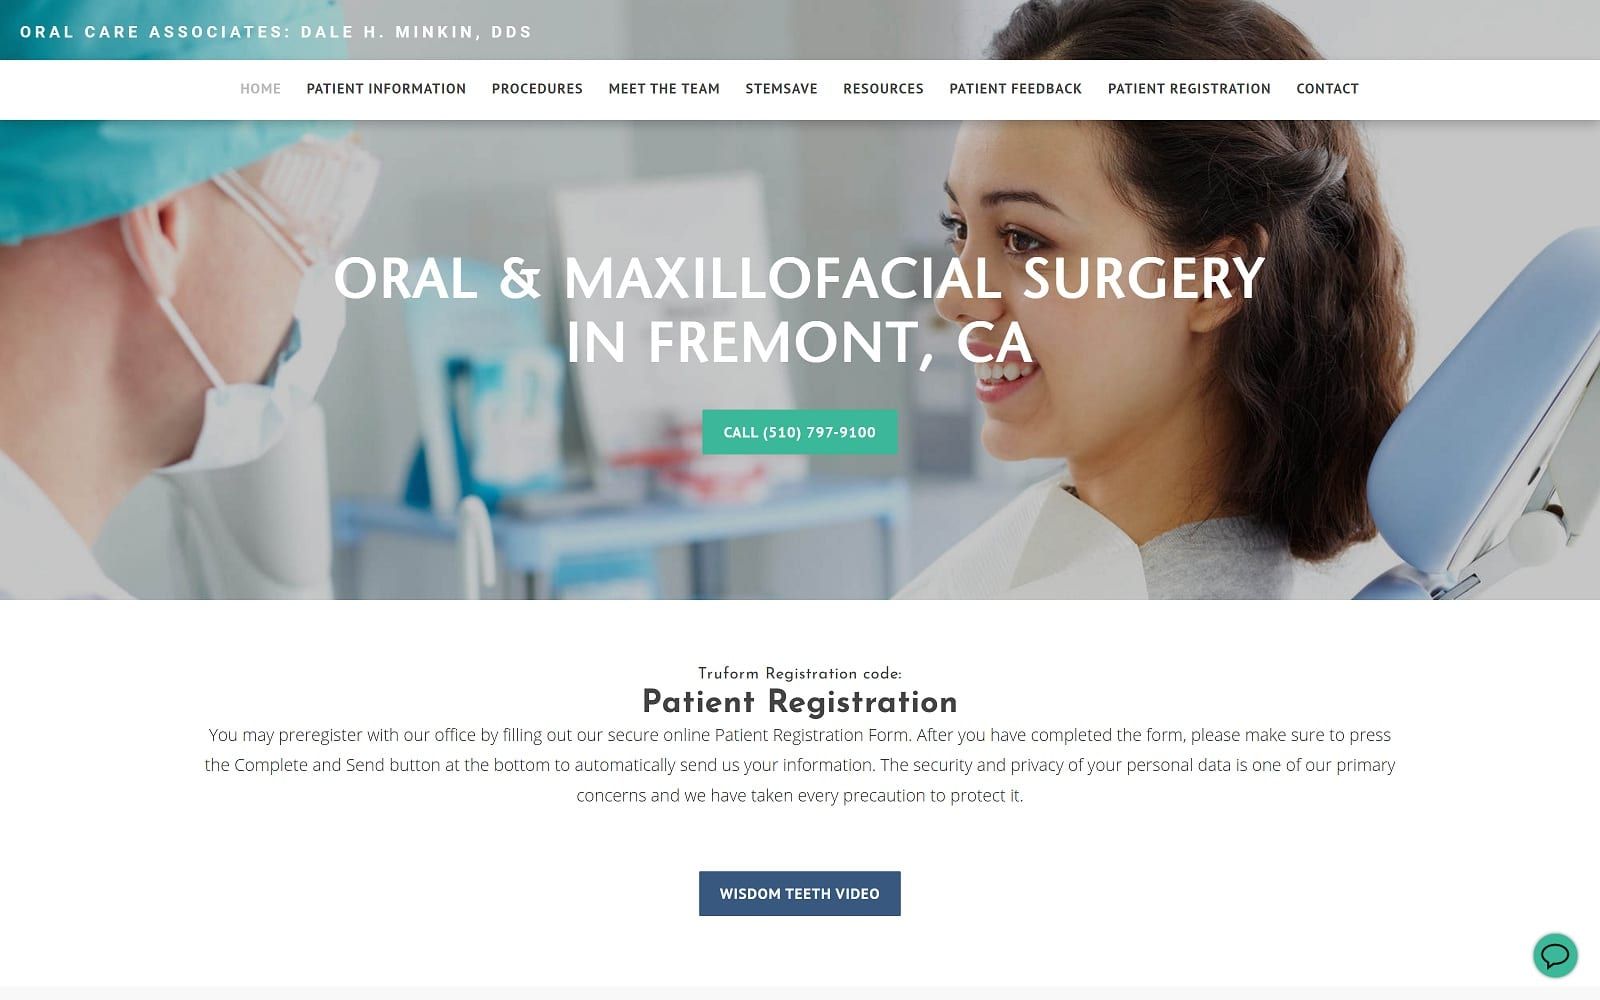 The screenshot of oral care associates: dale h minkin, dds oralcareassociates. Com website